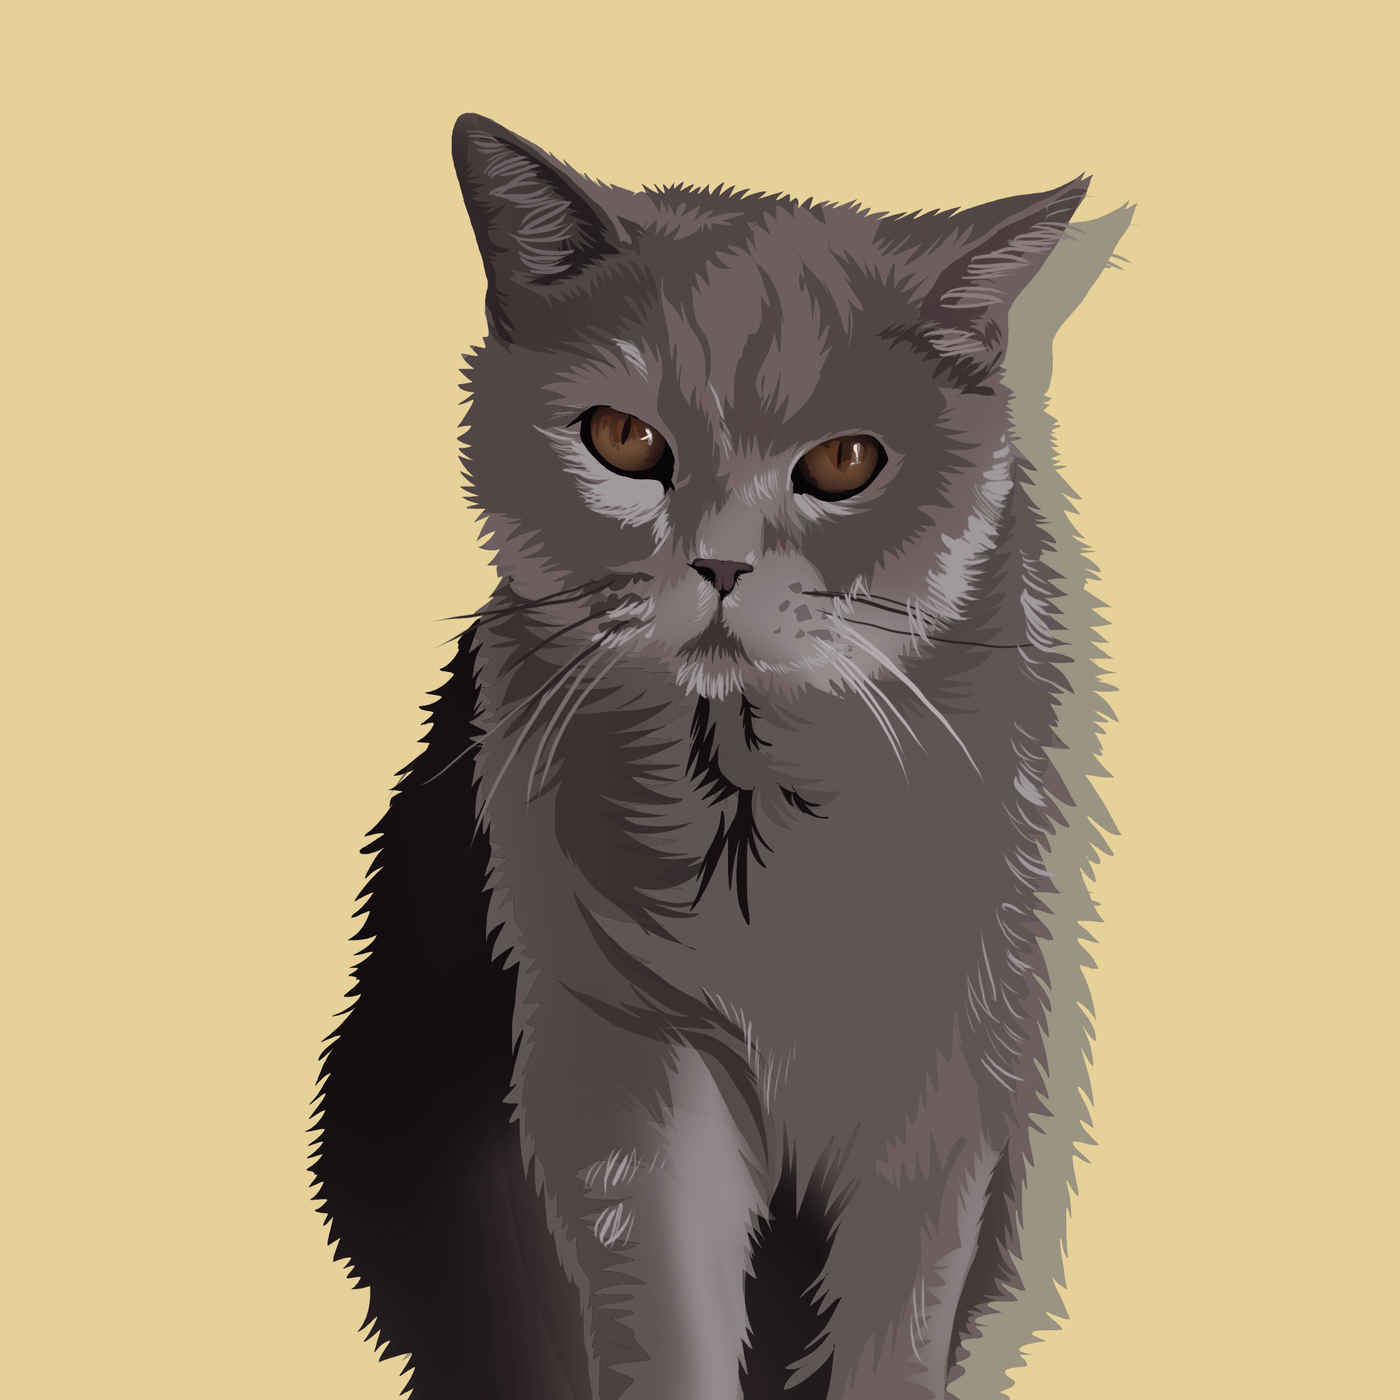 pet memorial vector art of an adorable black fur cat